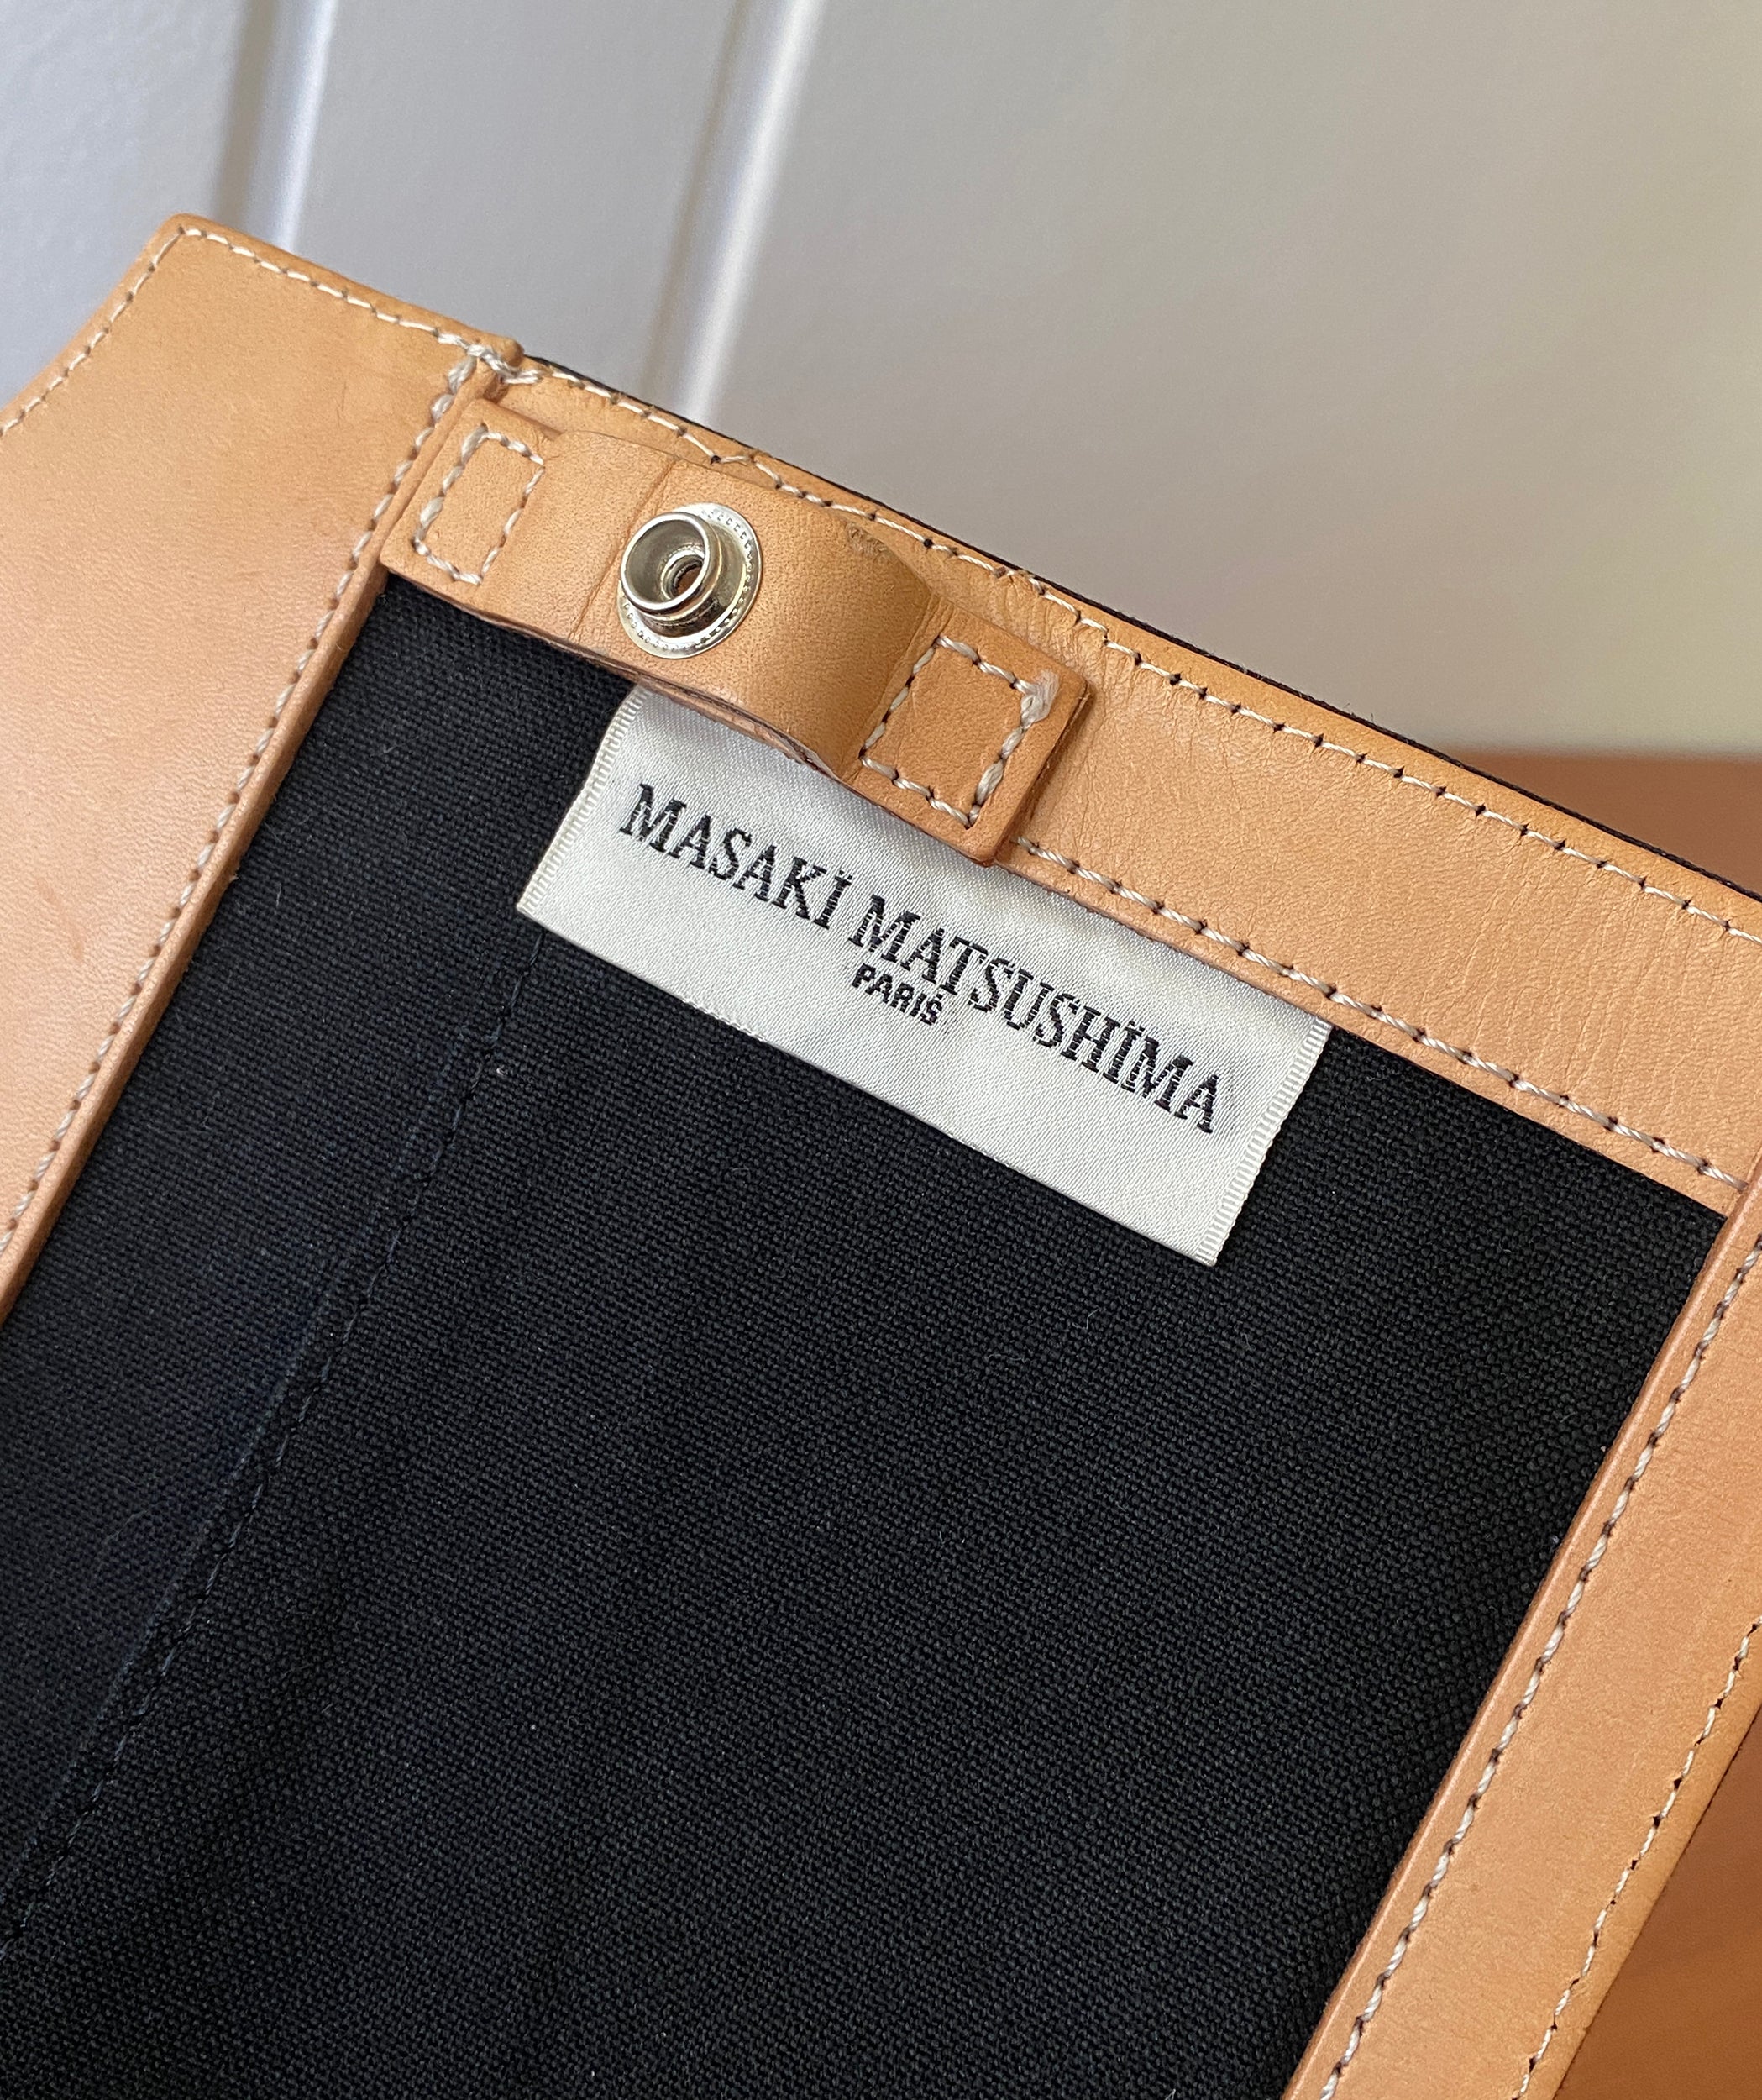 MASAKI MATSUSHIMA Pocket Shoulder Bag